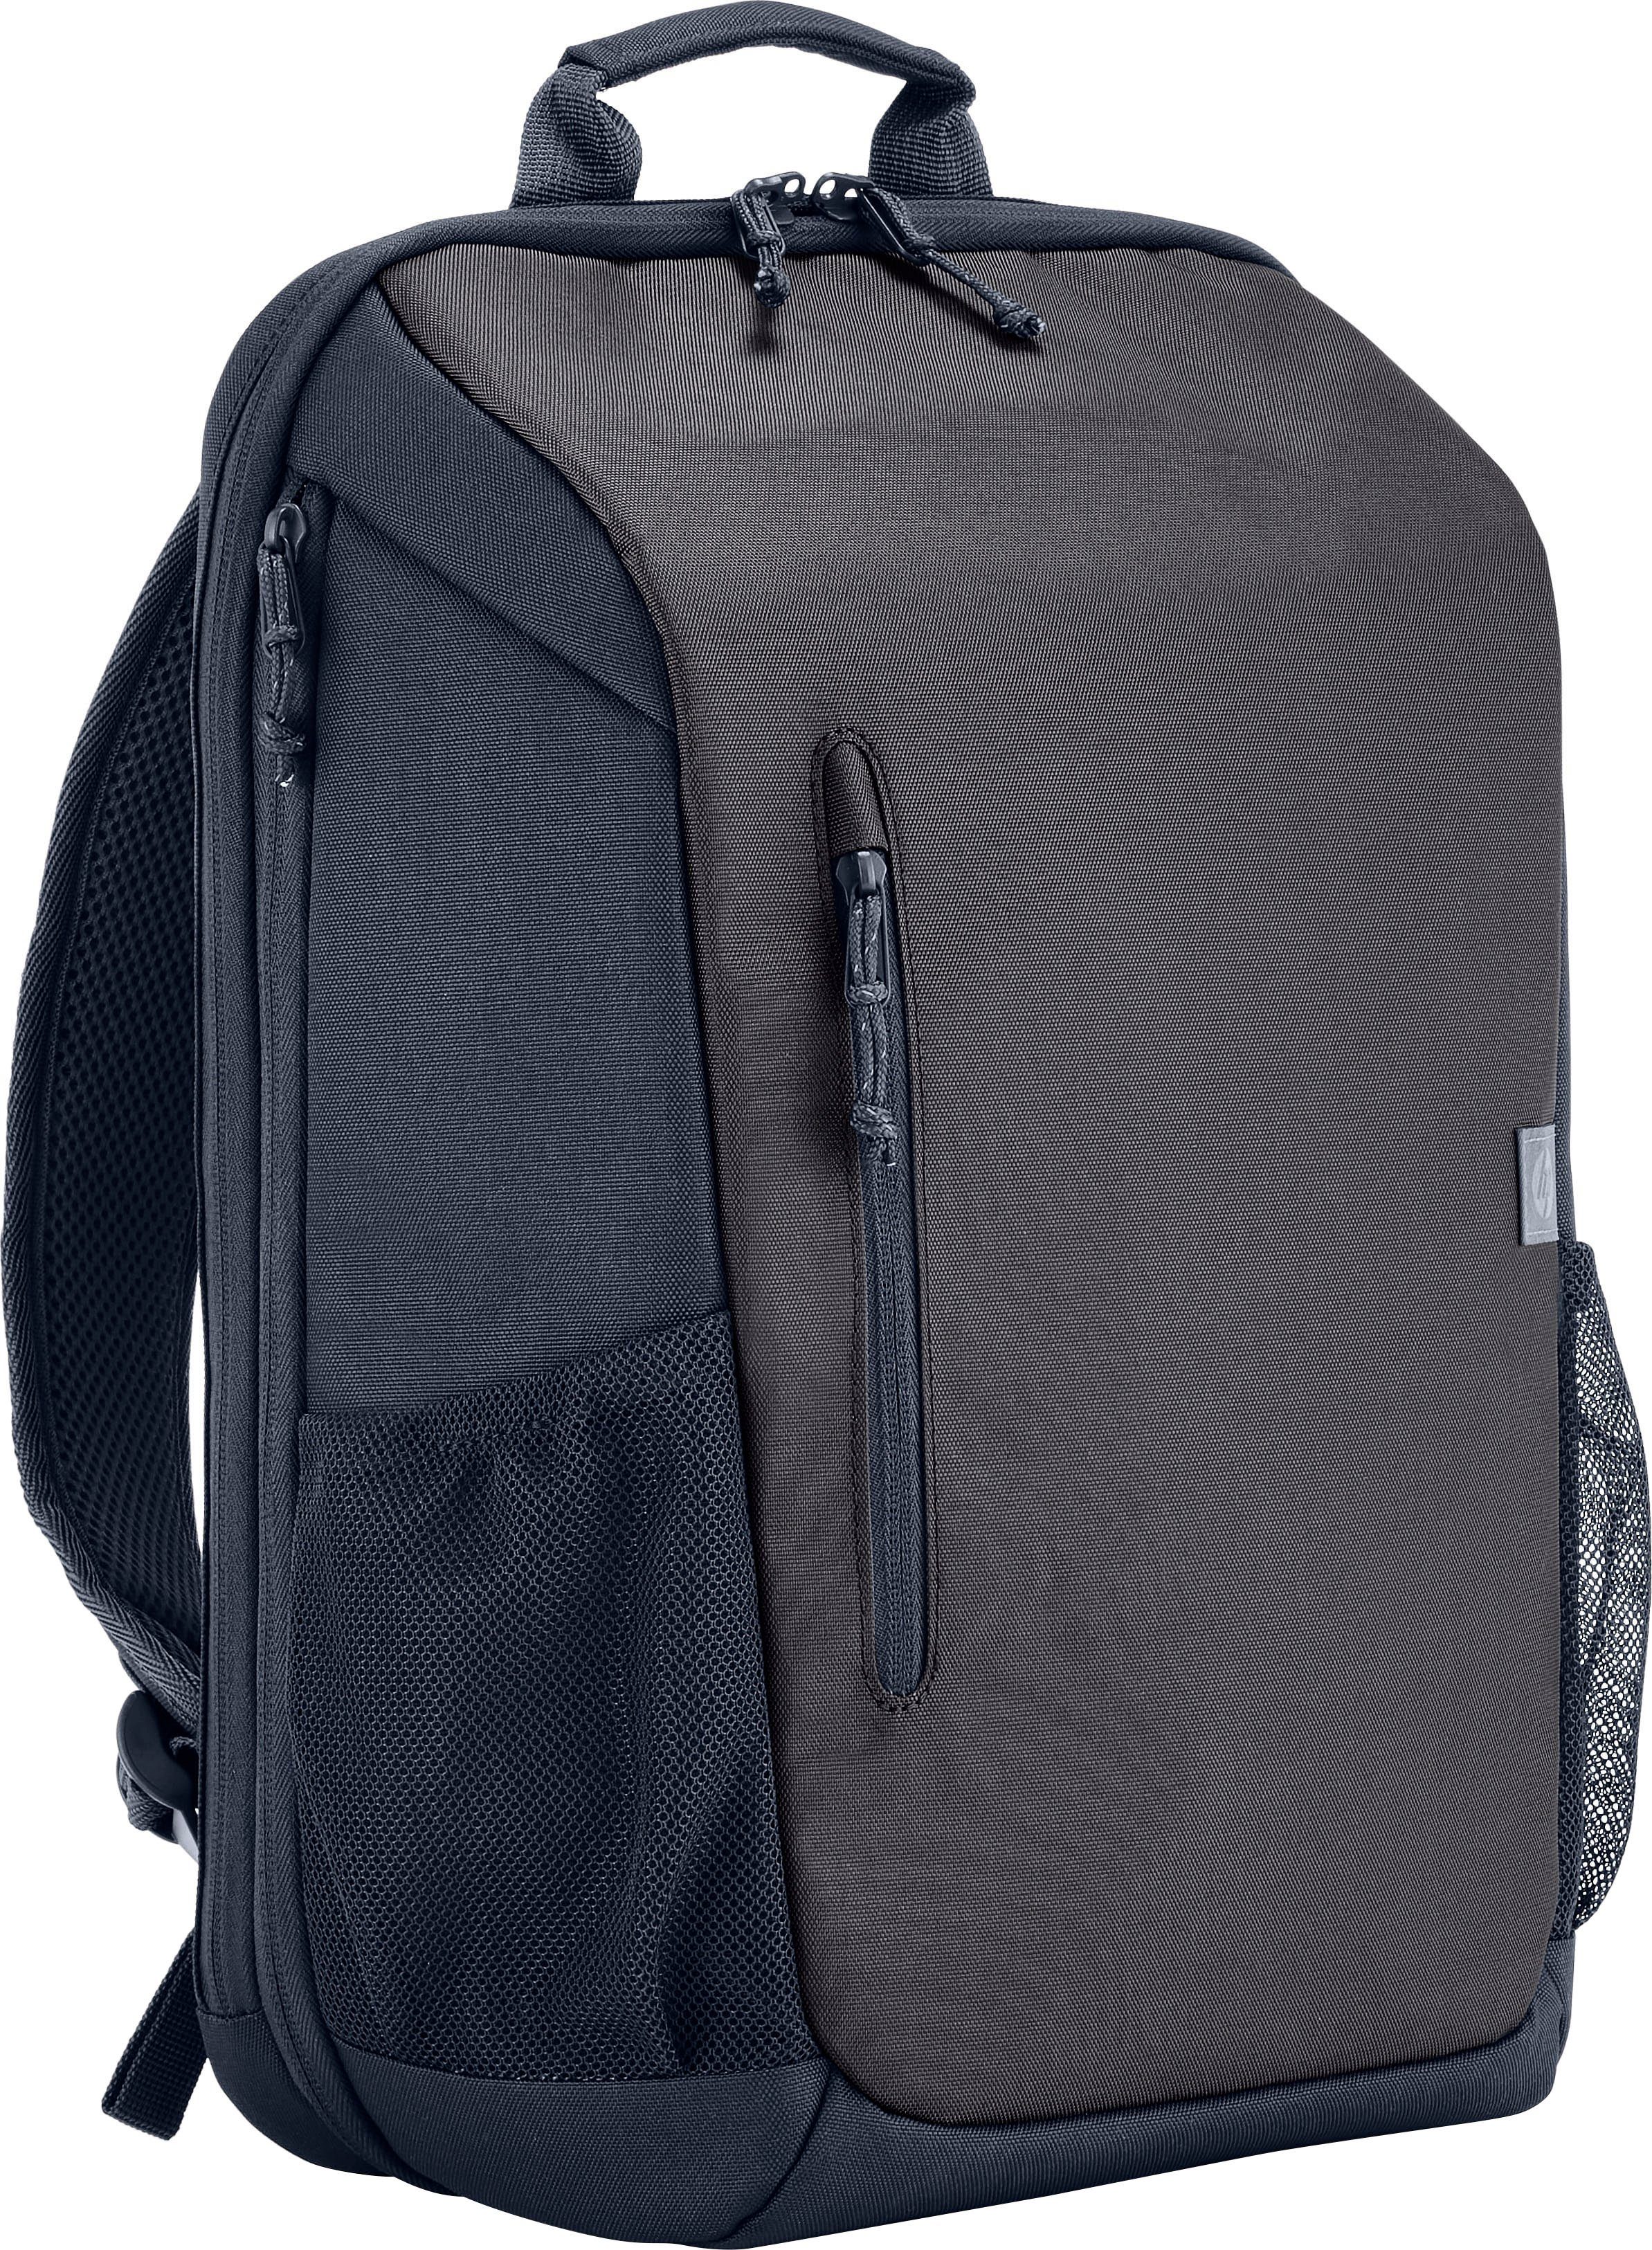 Reise-Laptop-Rucksack HP Notebook-Rucksack (1-tlg)